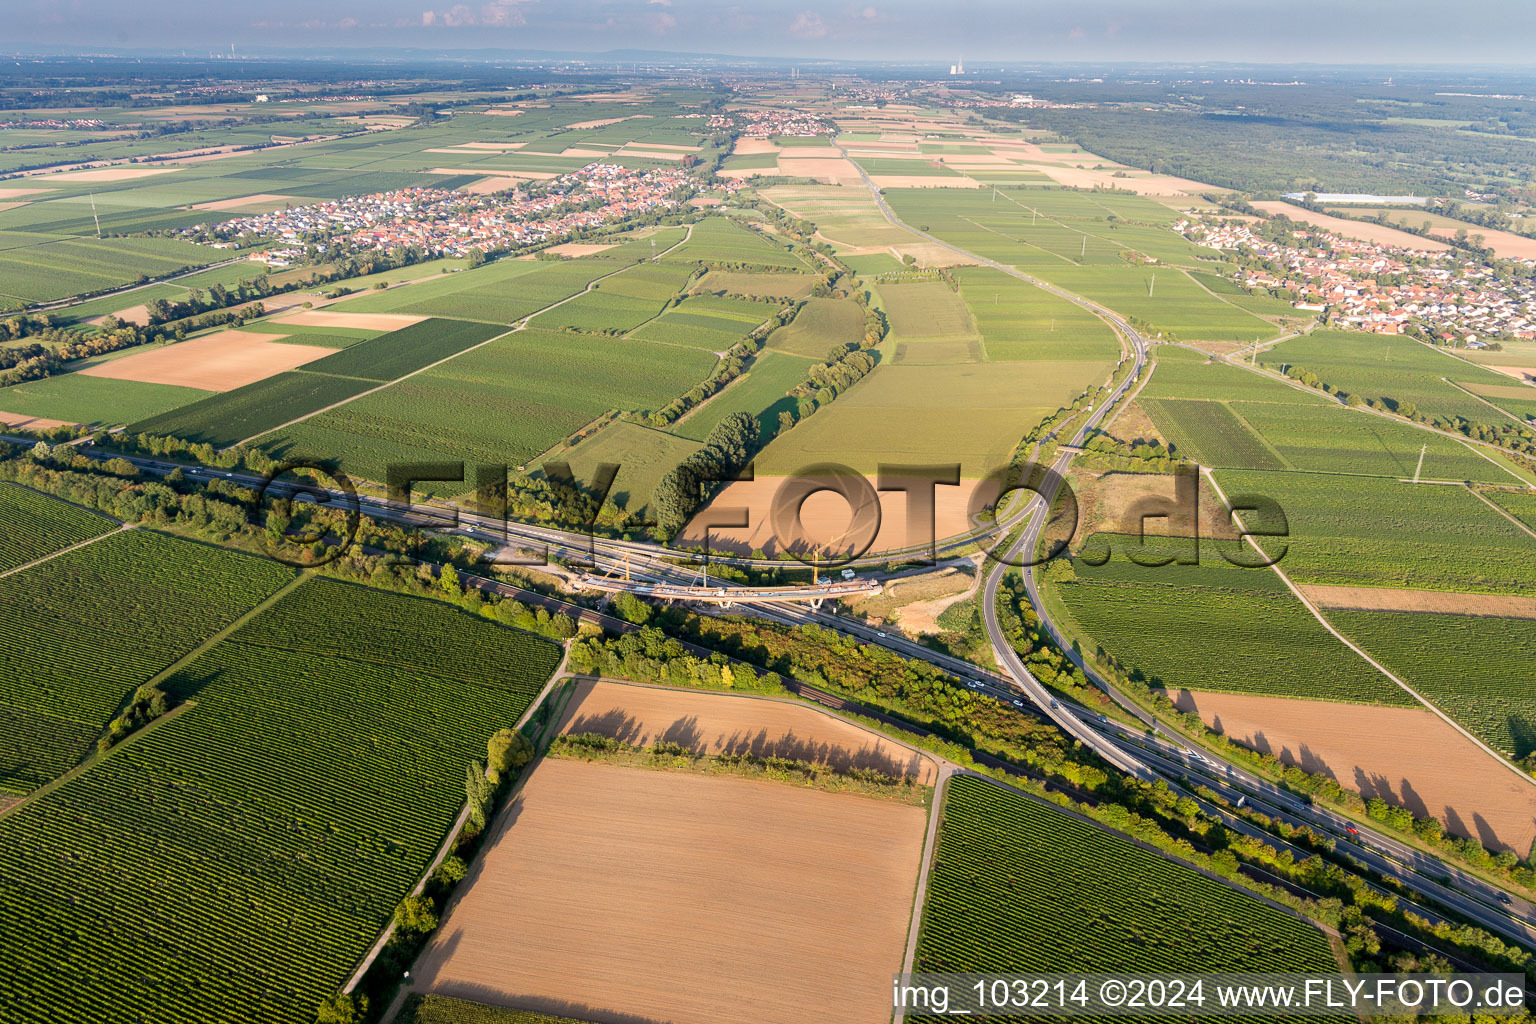 Aerial view of A65 exit Landau-Nord in the district Dammheim in Landau in der Pfalz in the state Rhineland-Palatinate, Germany